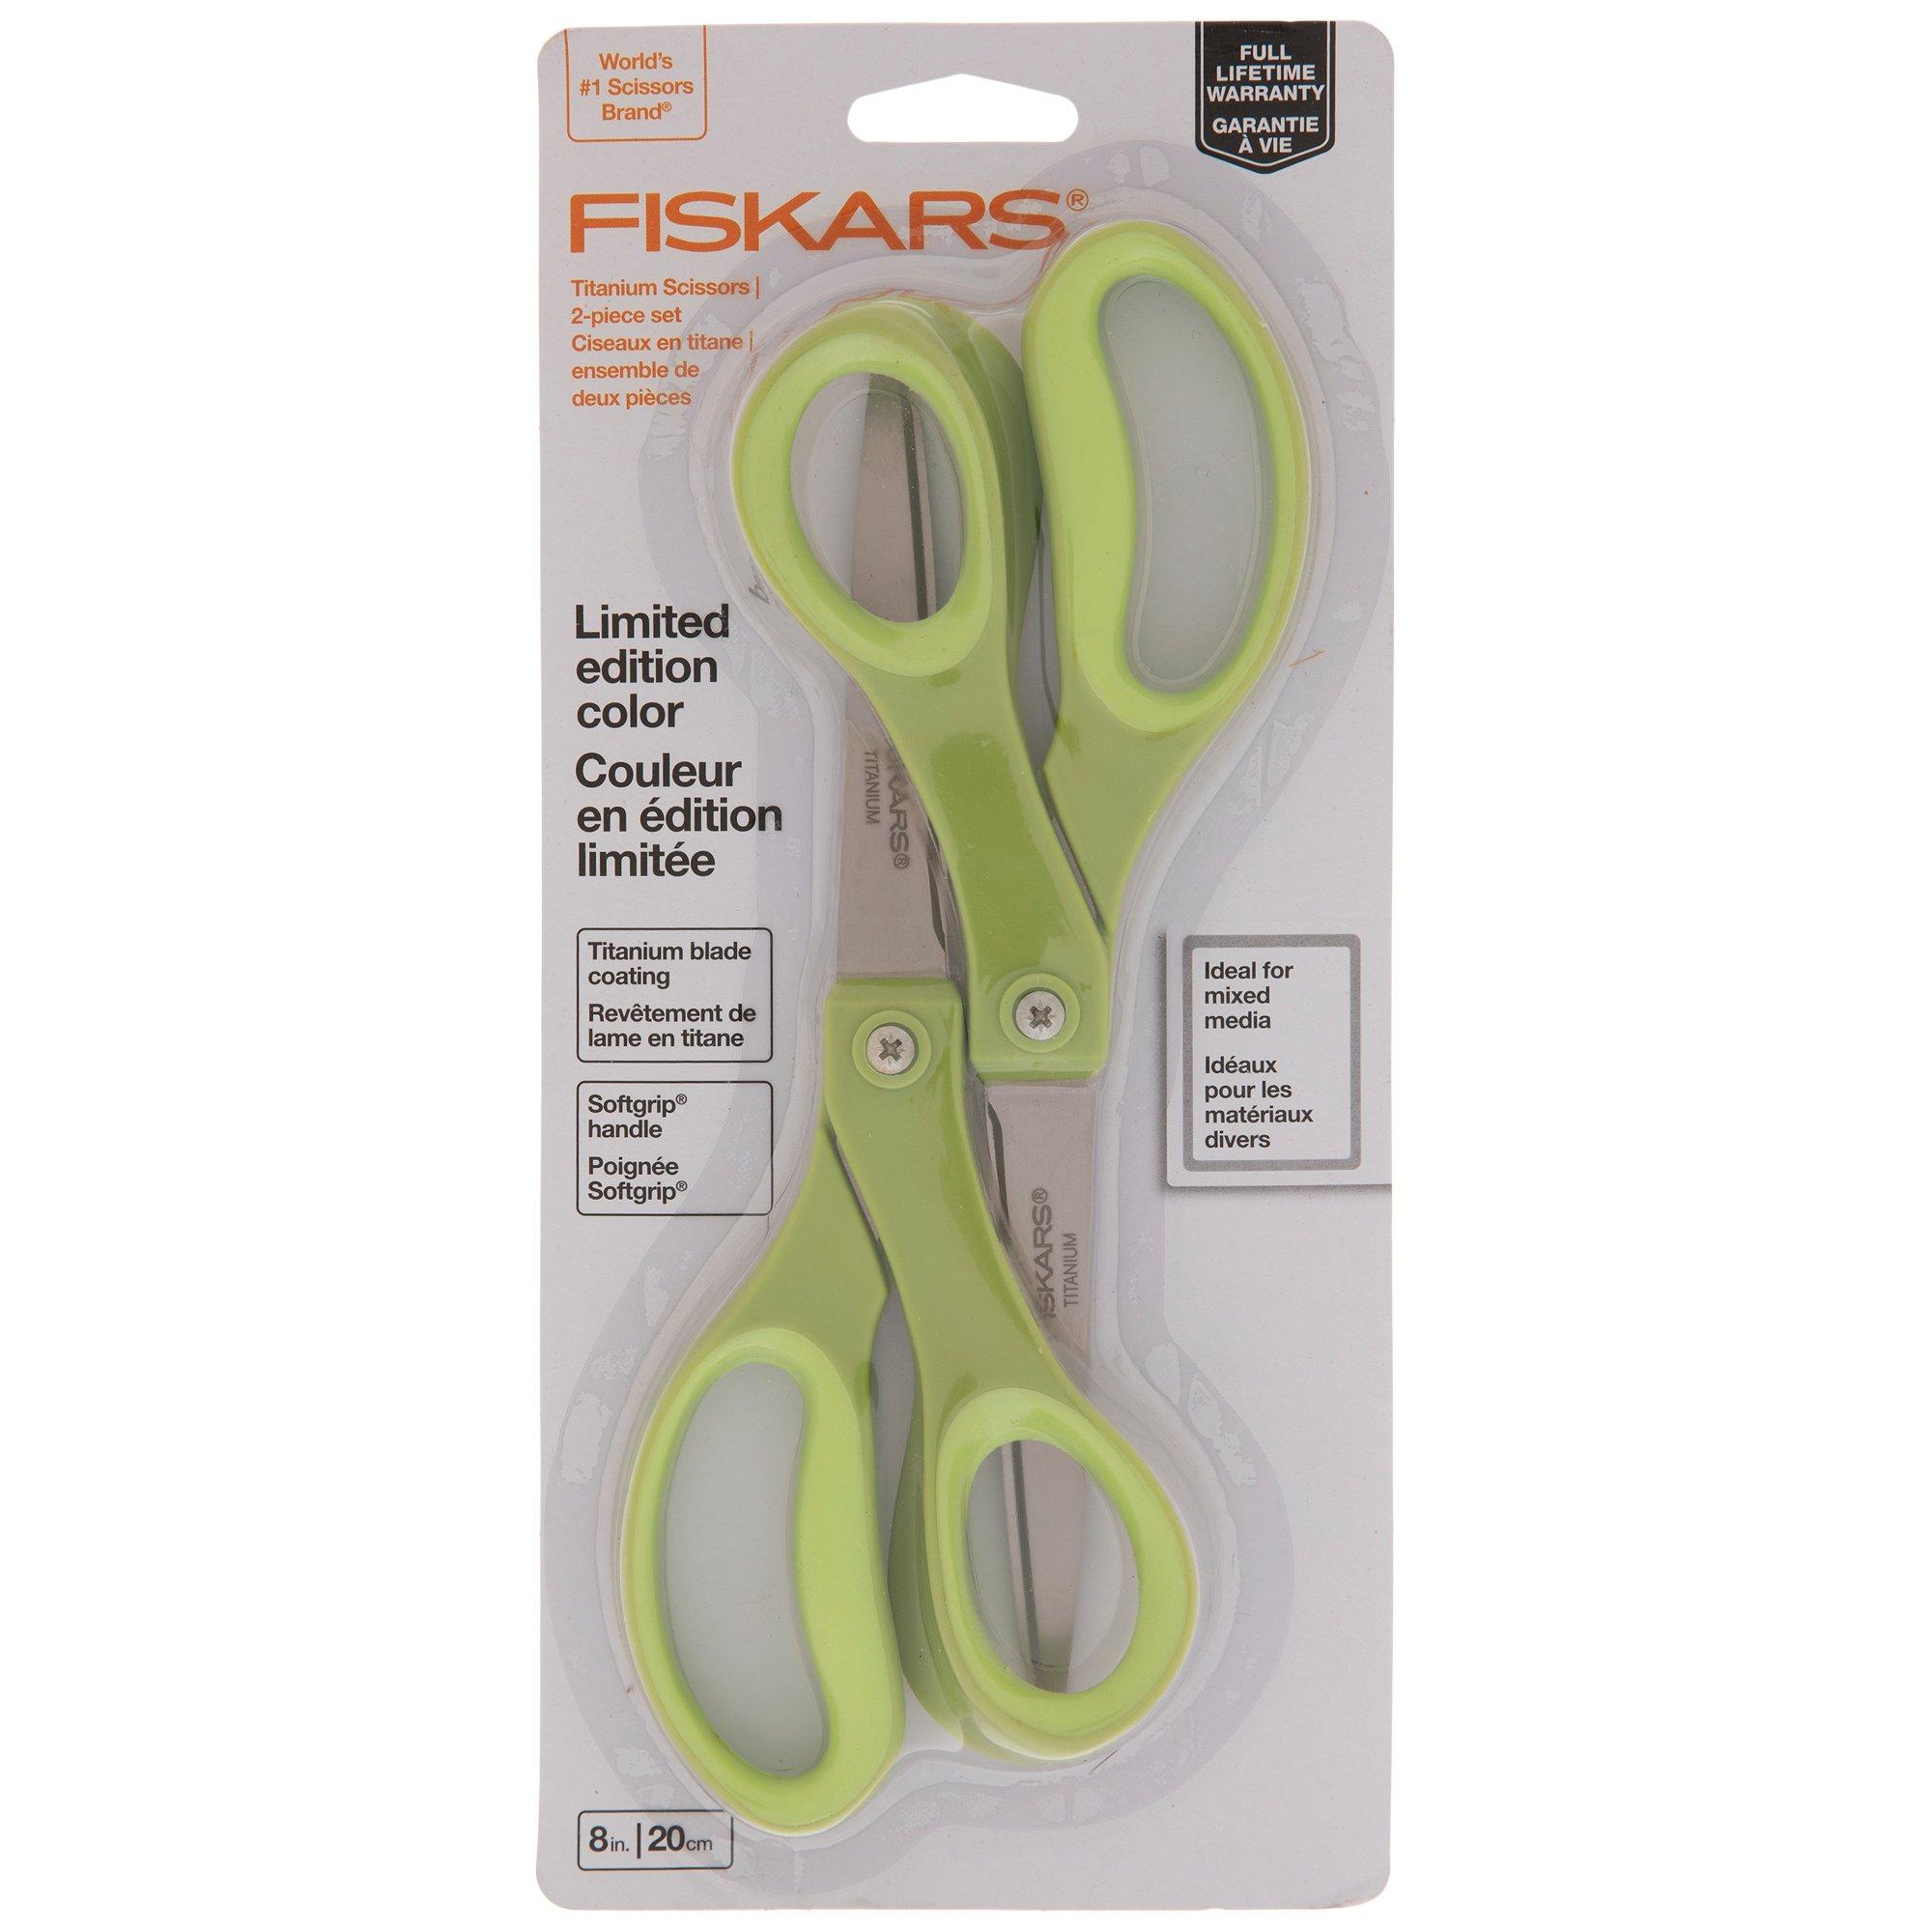 RI 539-F 8 Fabric Scissor - Made in America USA Fiskars Scissors Tailor  Shears